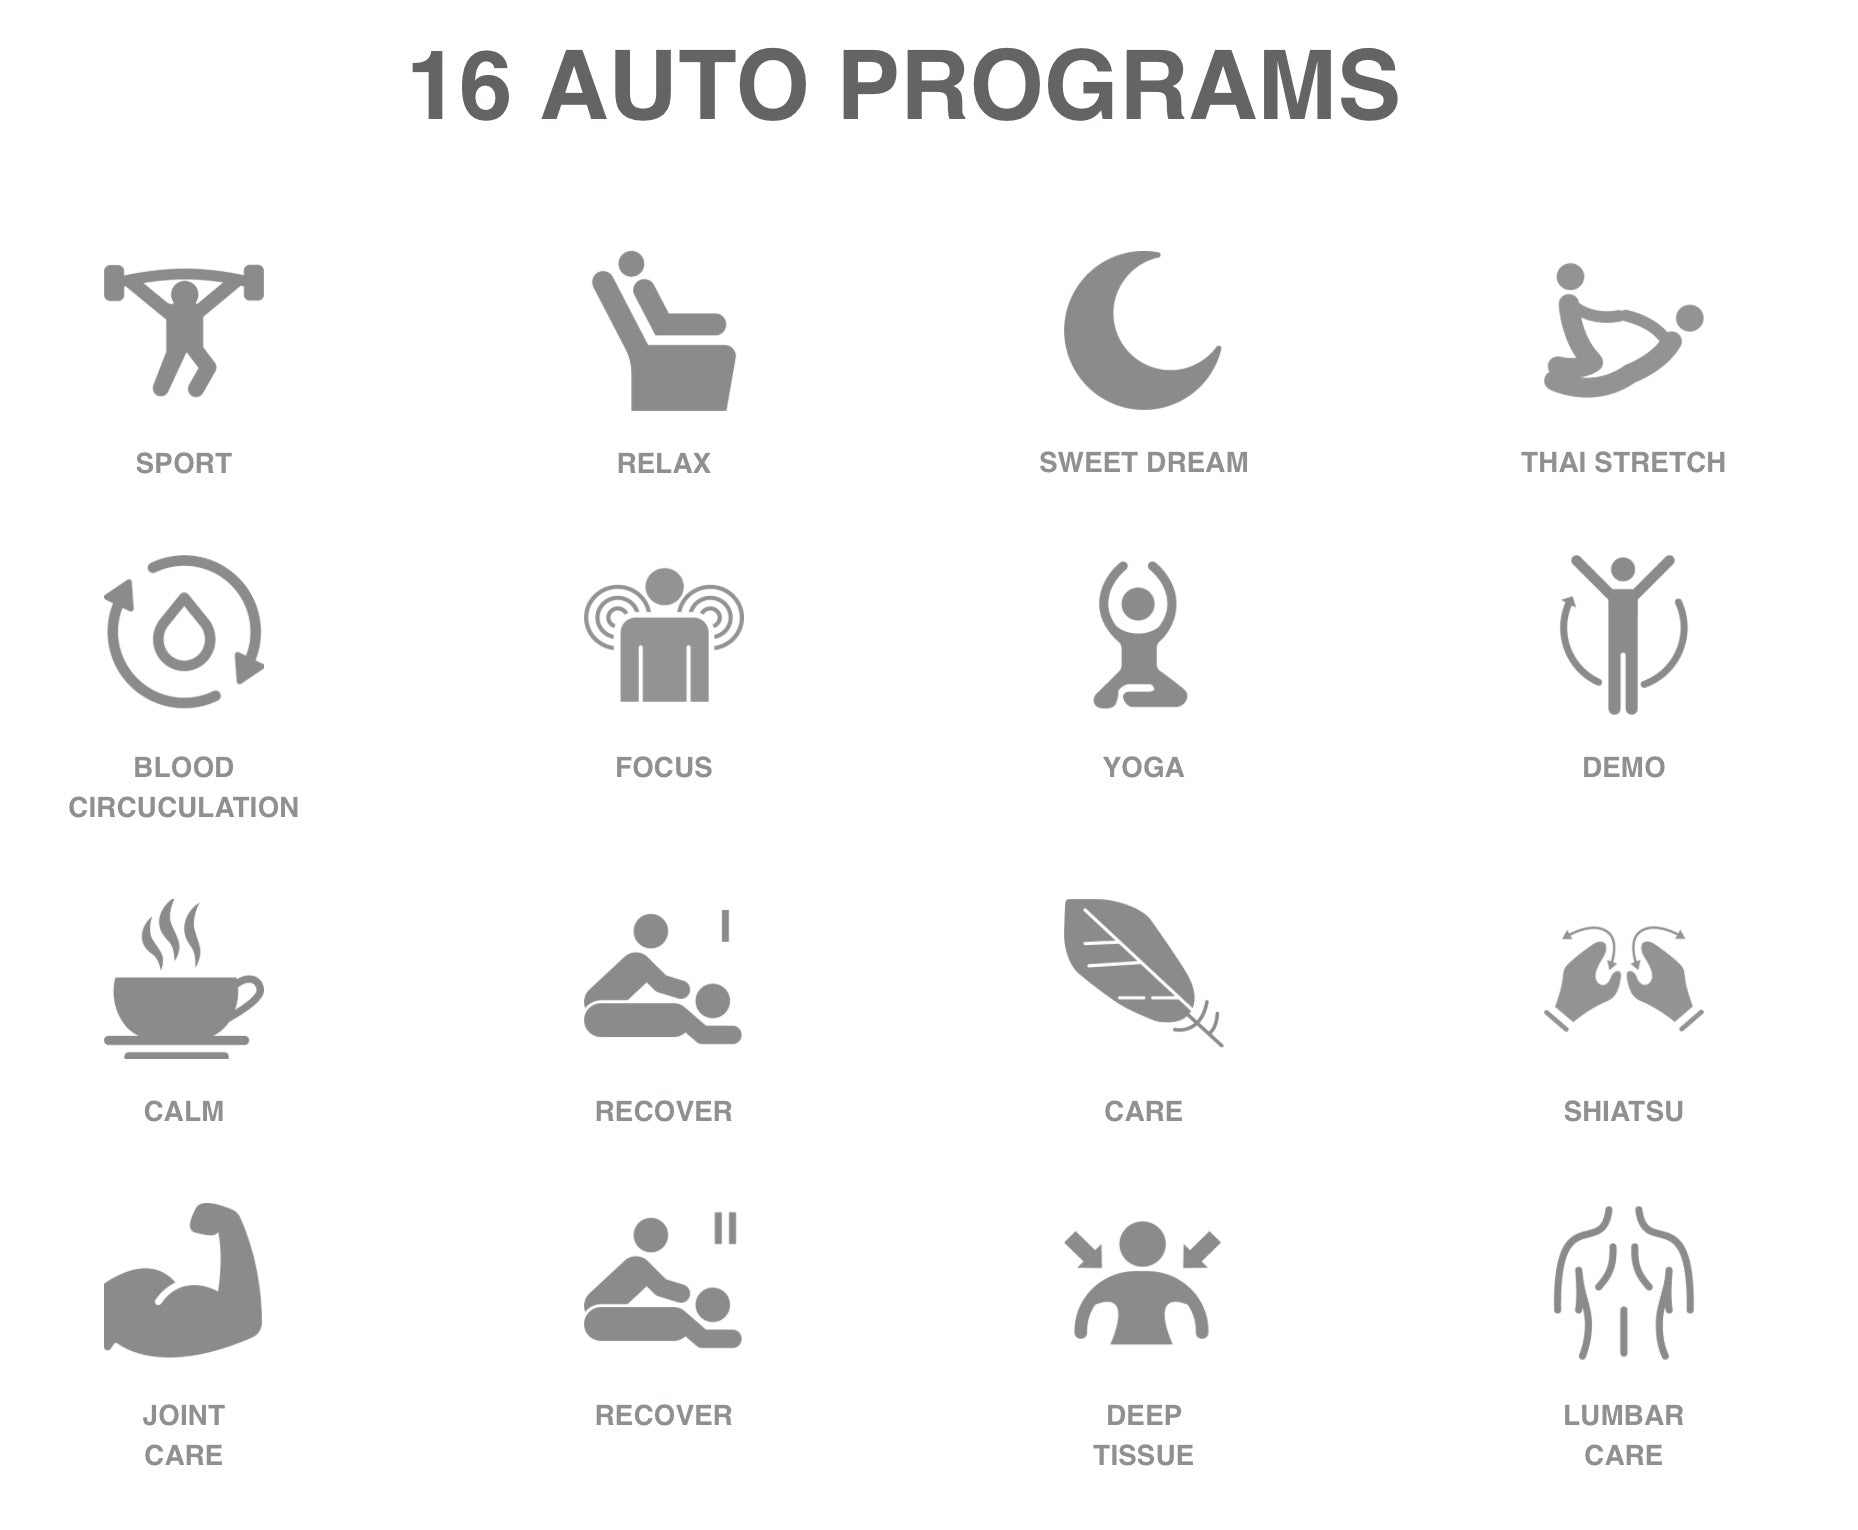 16 Auto Programs